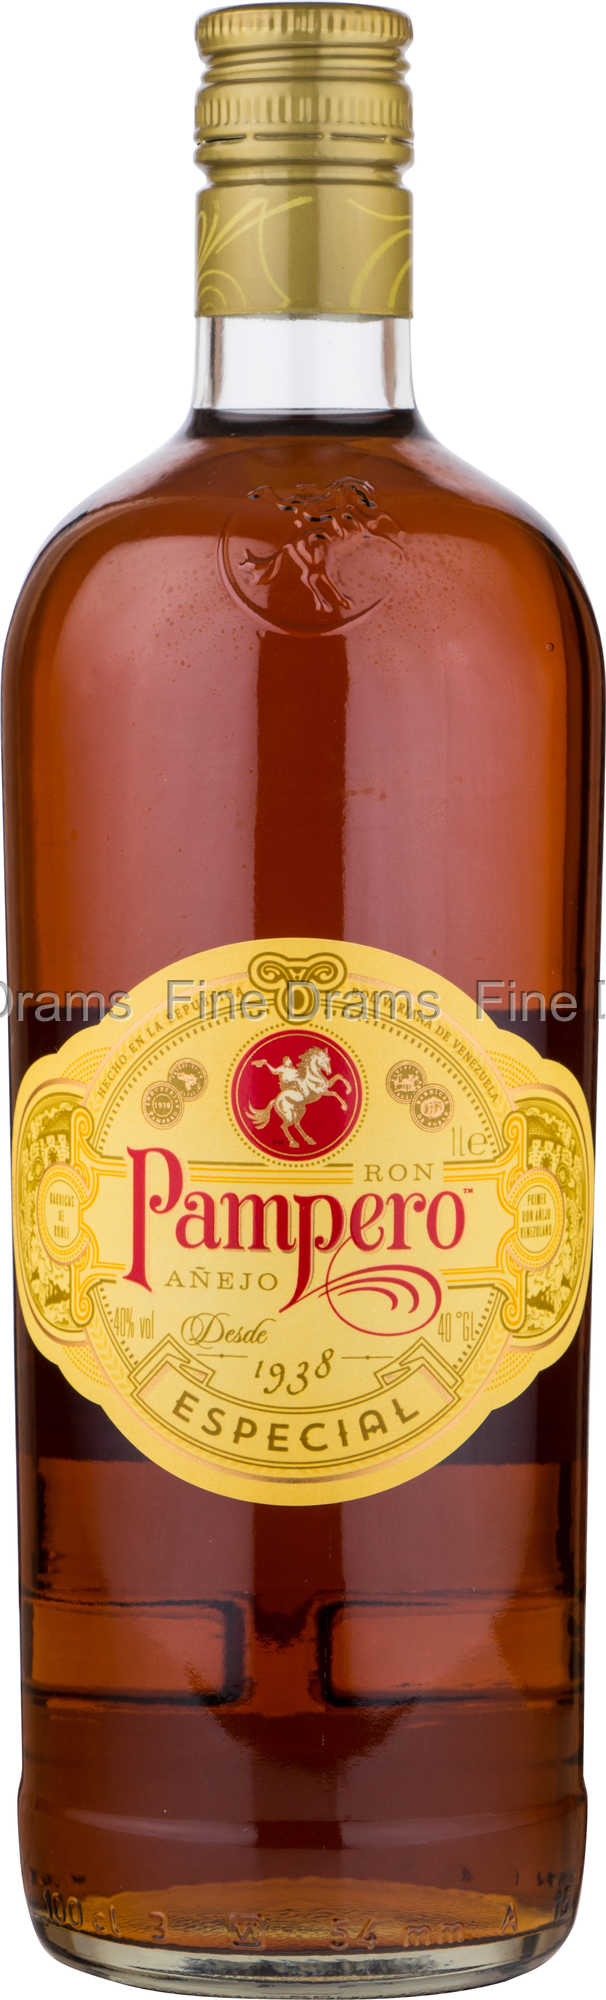 Pampero Anejo Rum Especial